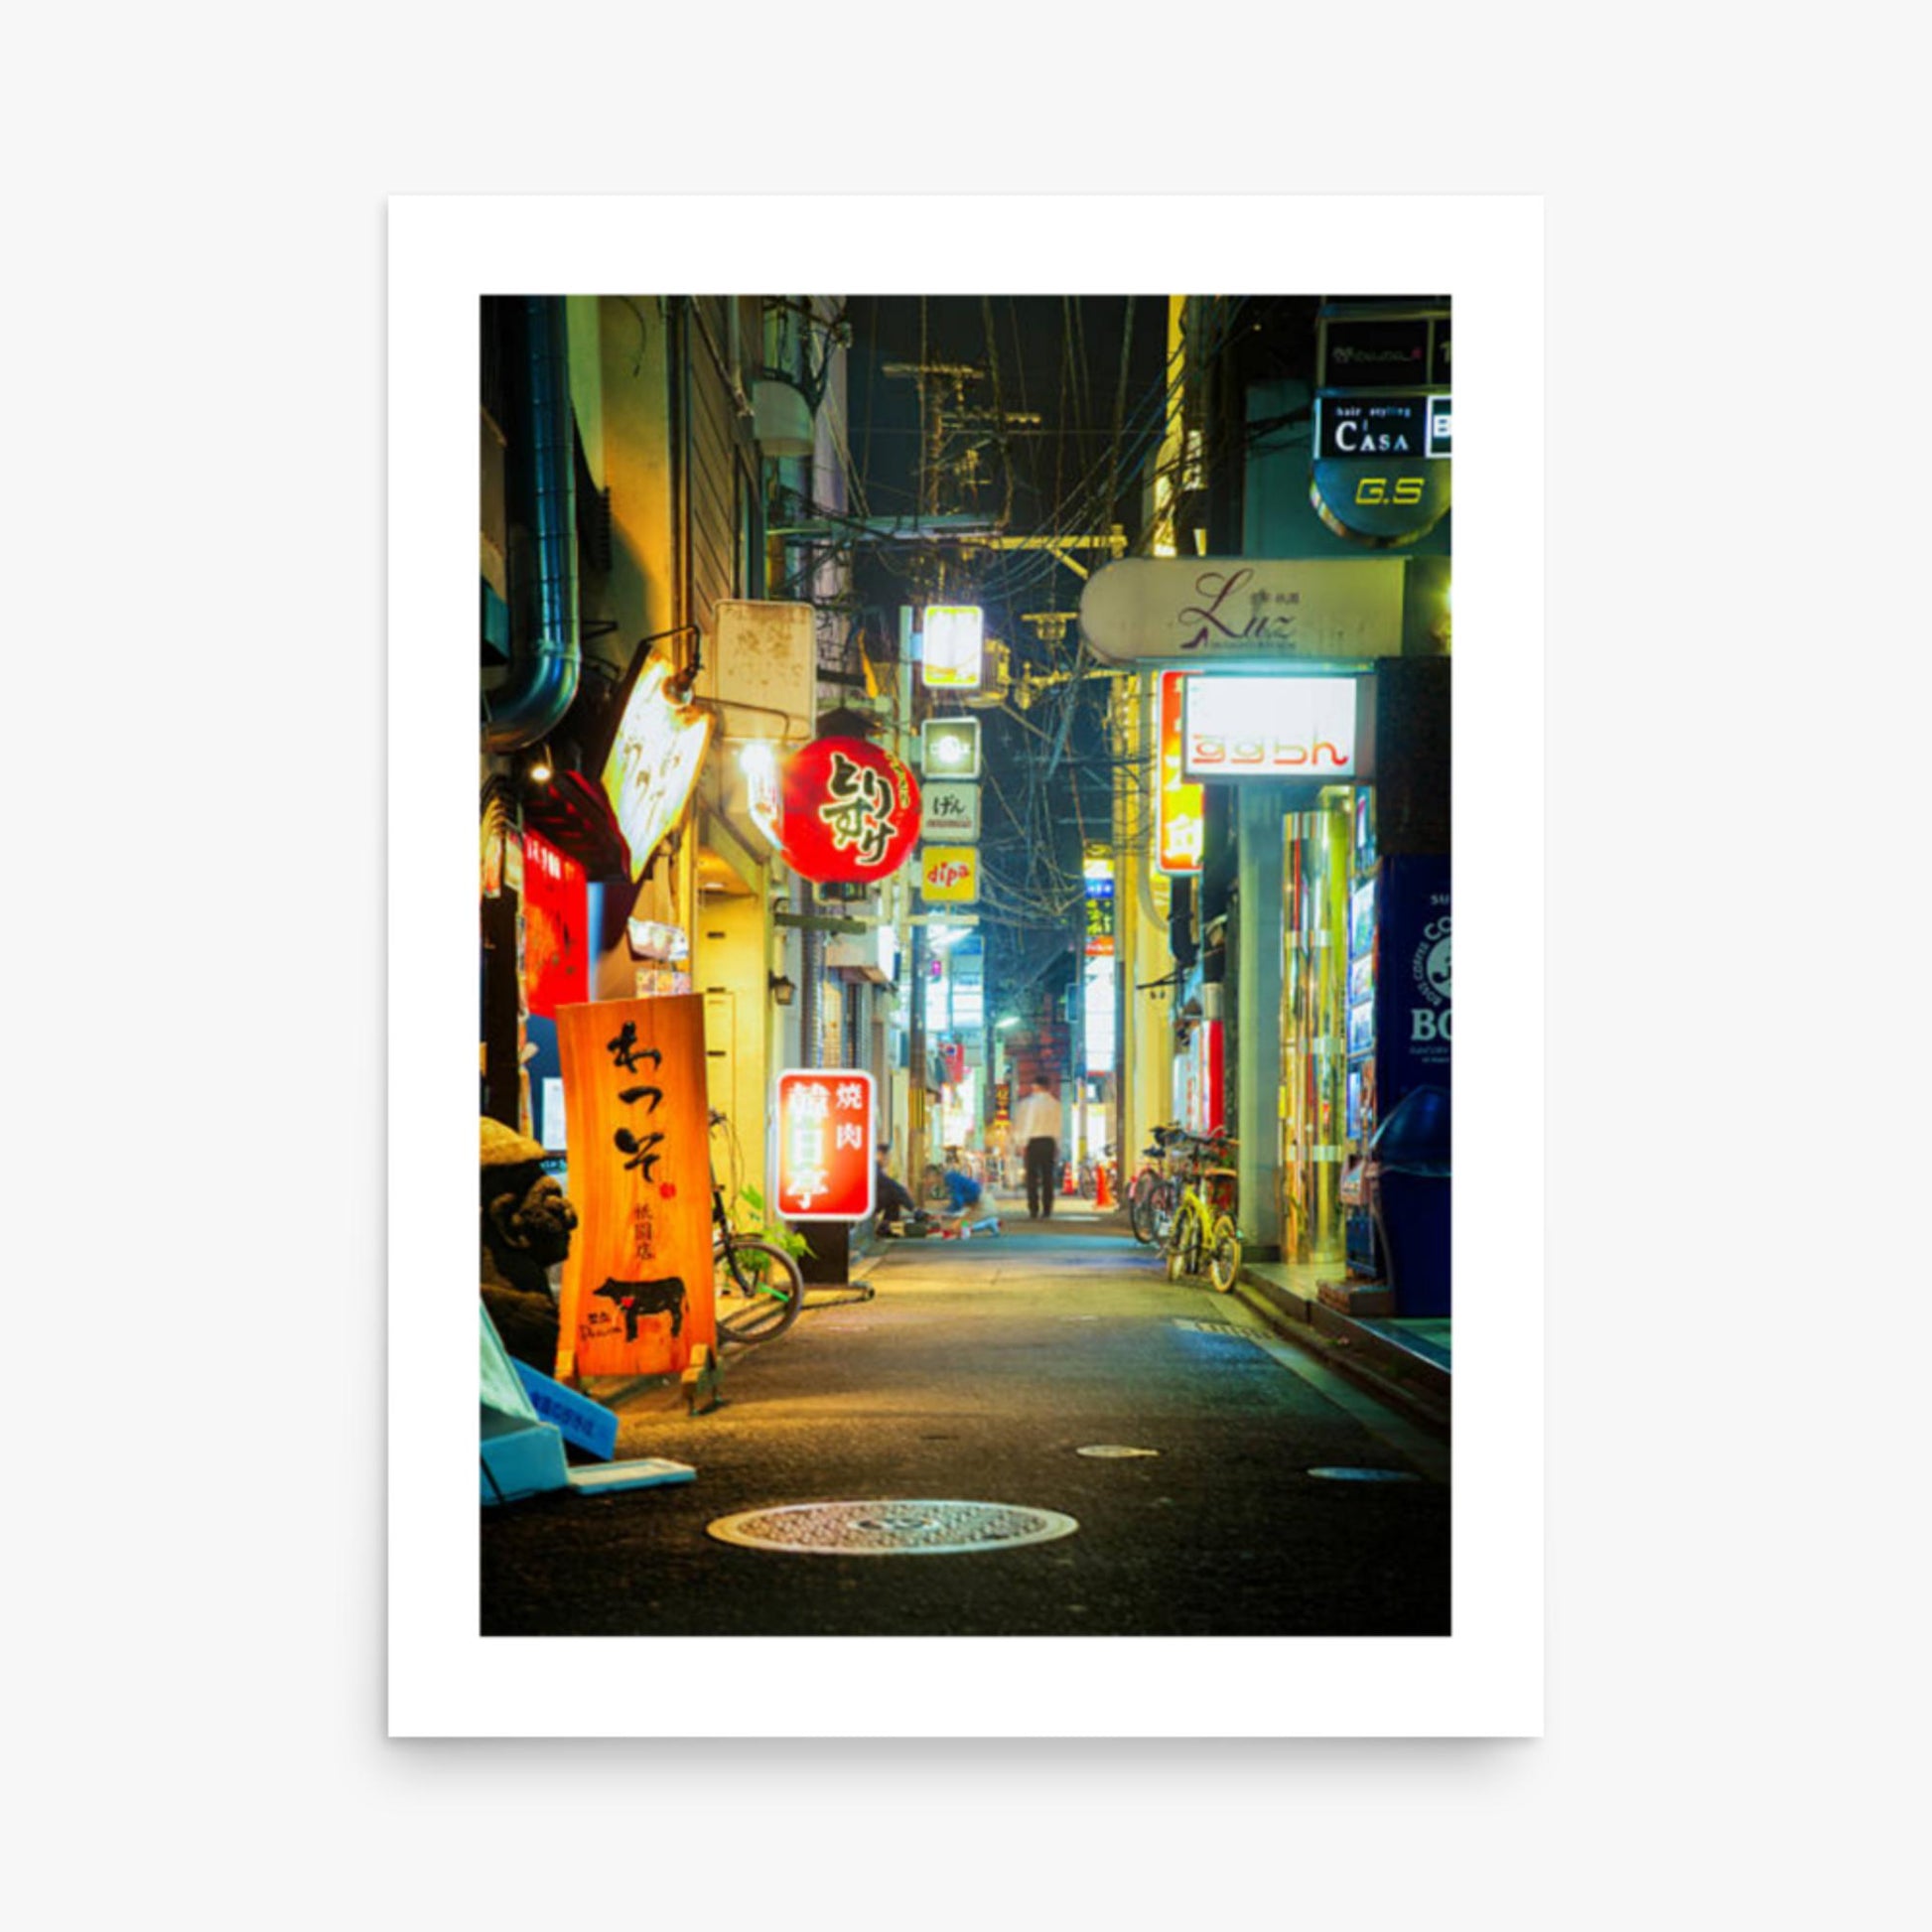 Kyoto, Japan backstreet at night 18x24 in Poster